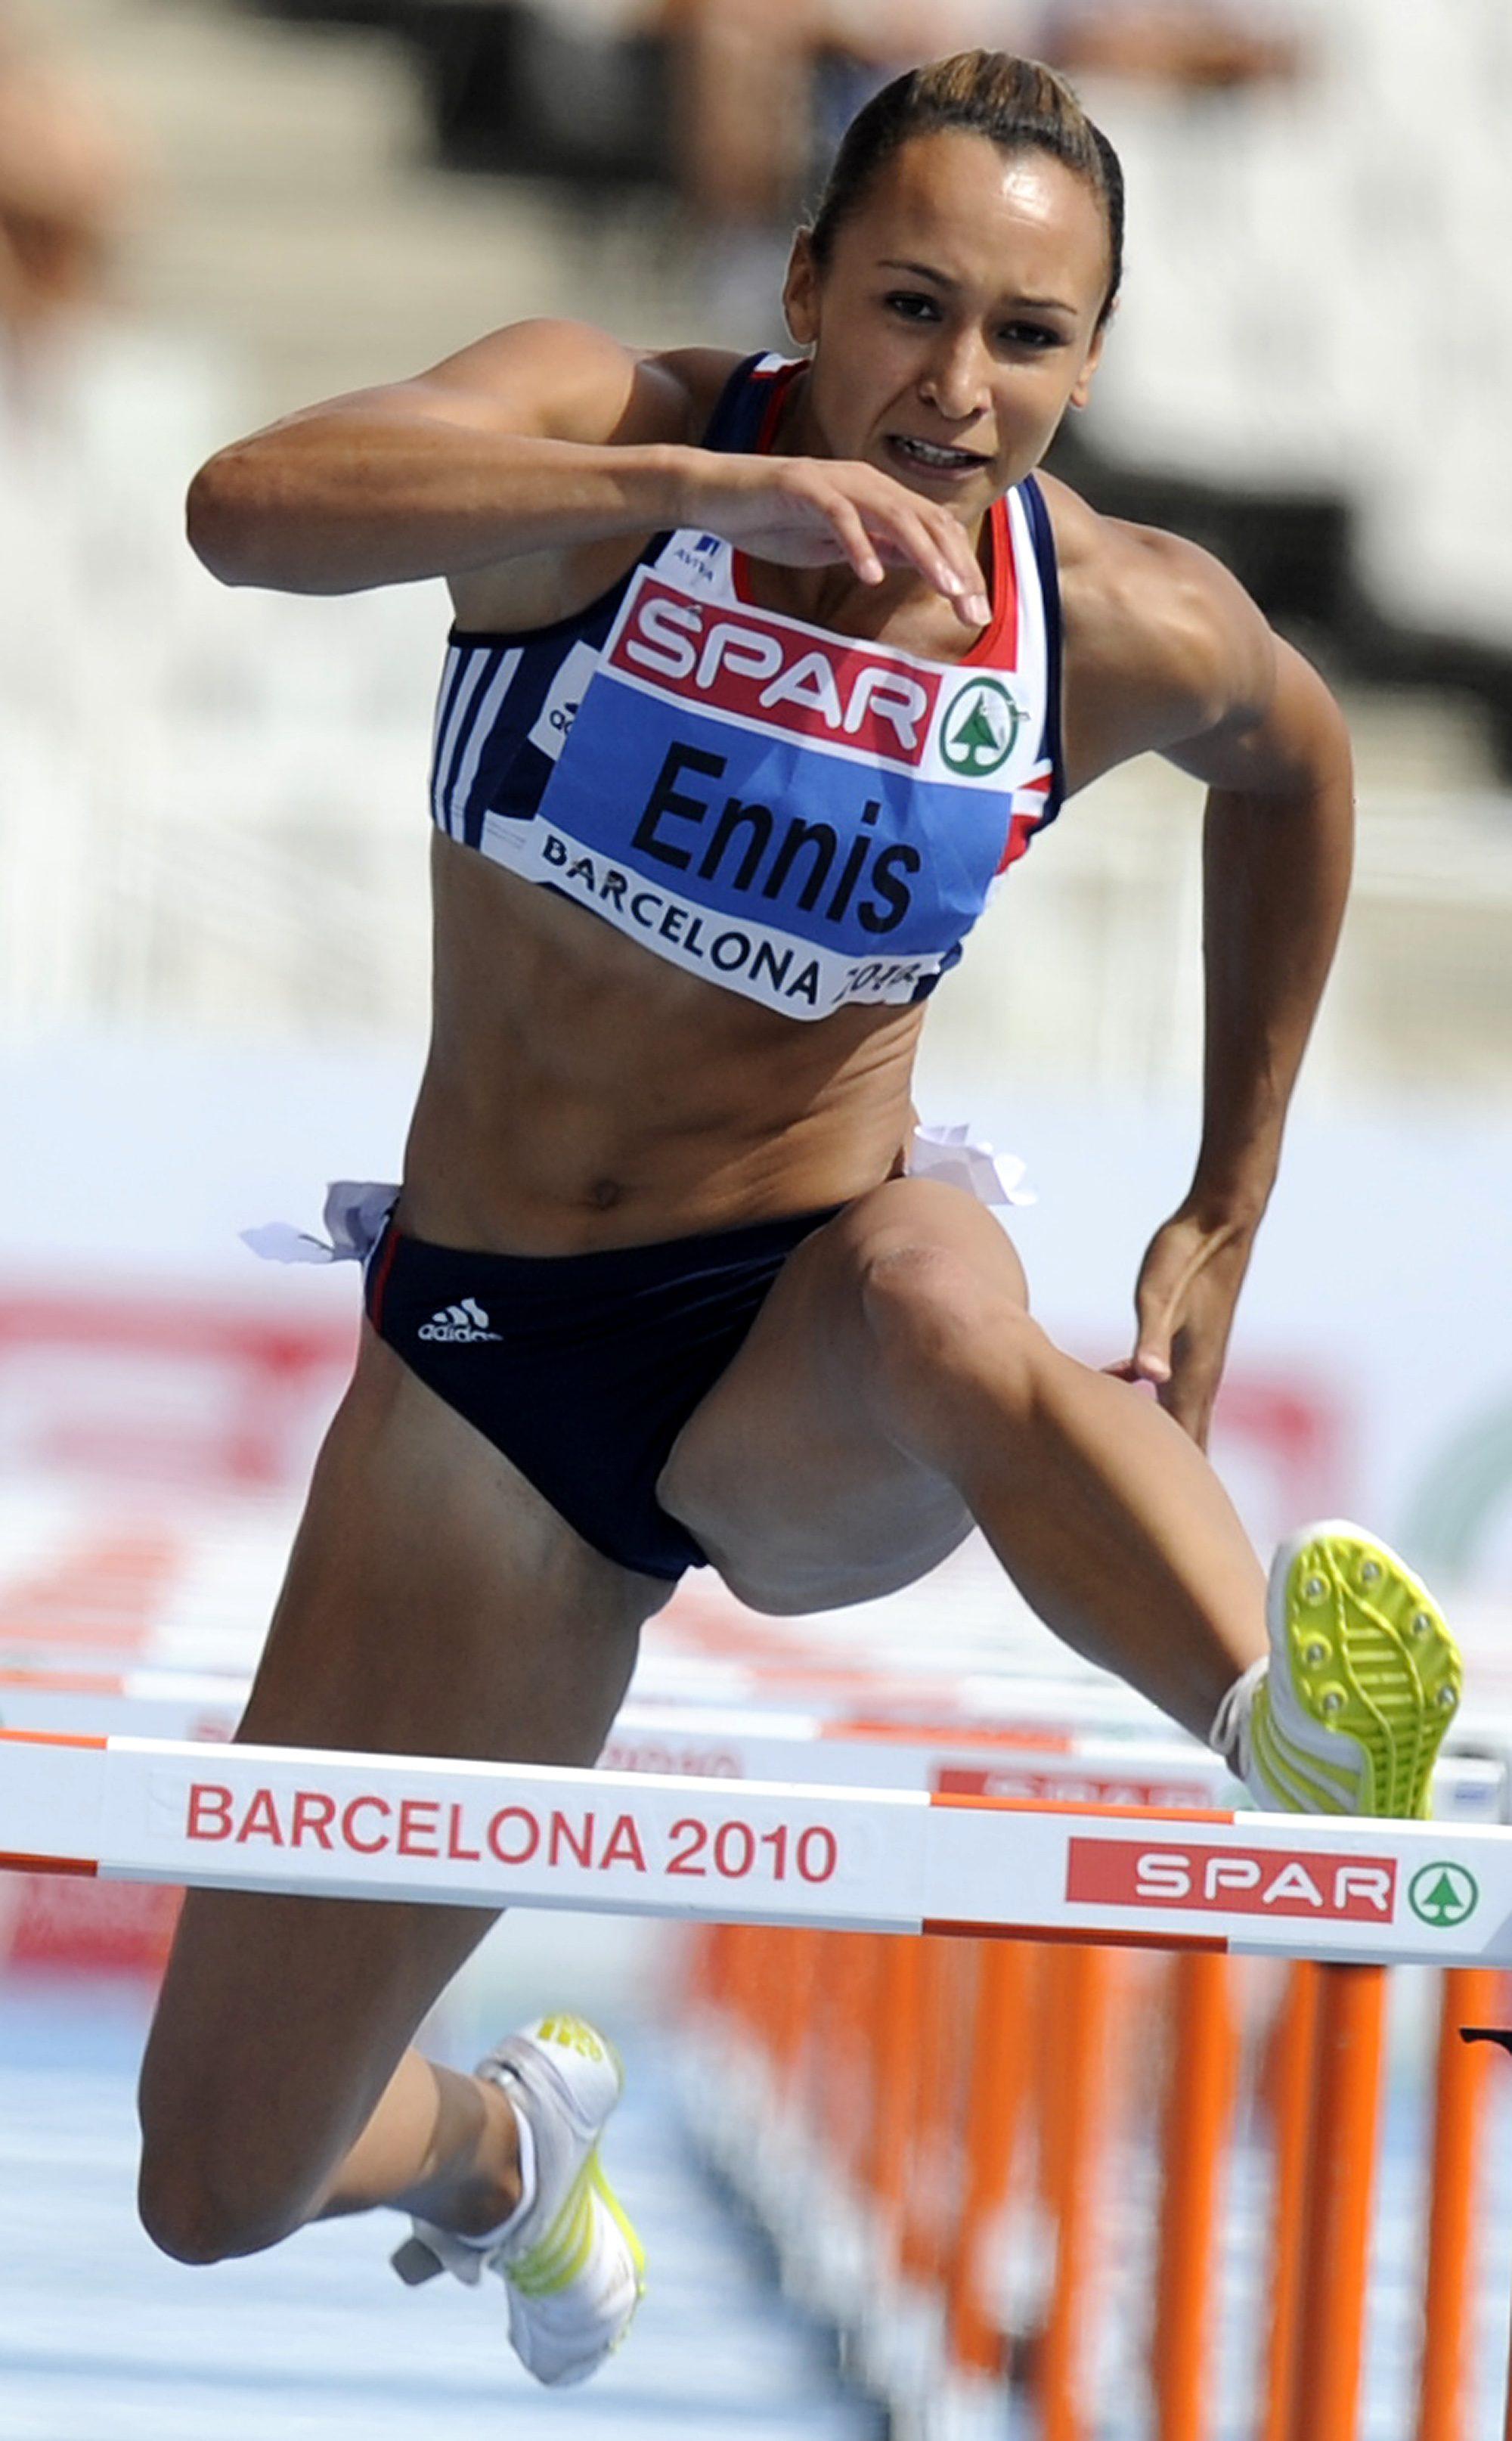 Sexy Athletes - Jessica Ennis long jump and hurdles x39 : アスリート達の ...2000 x 3228